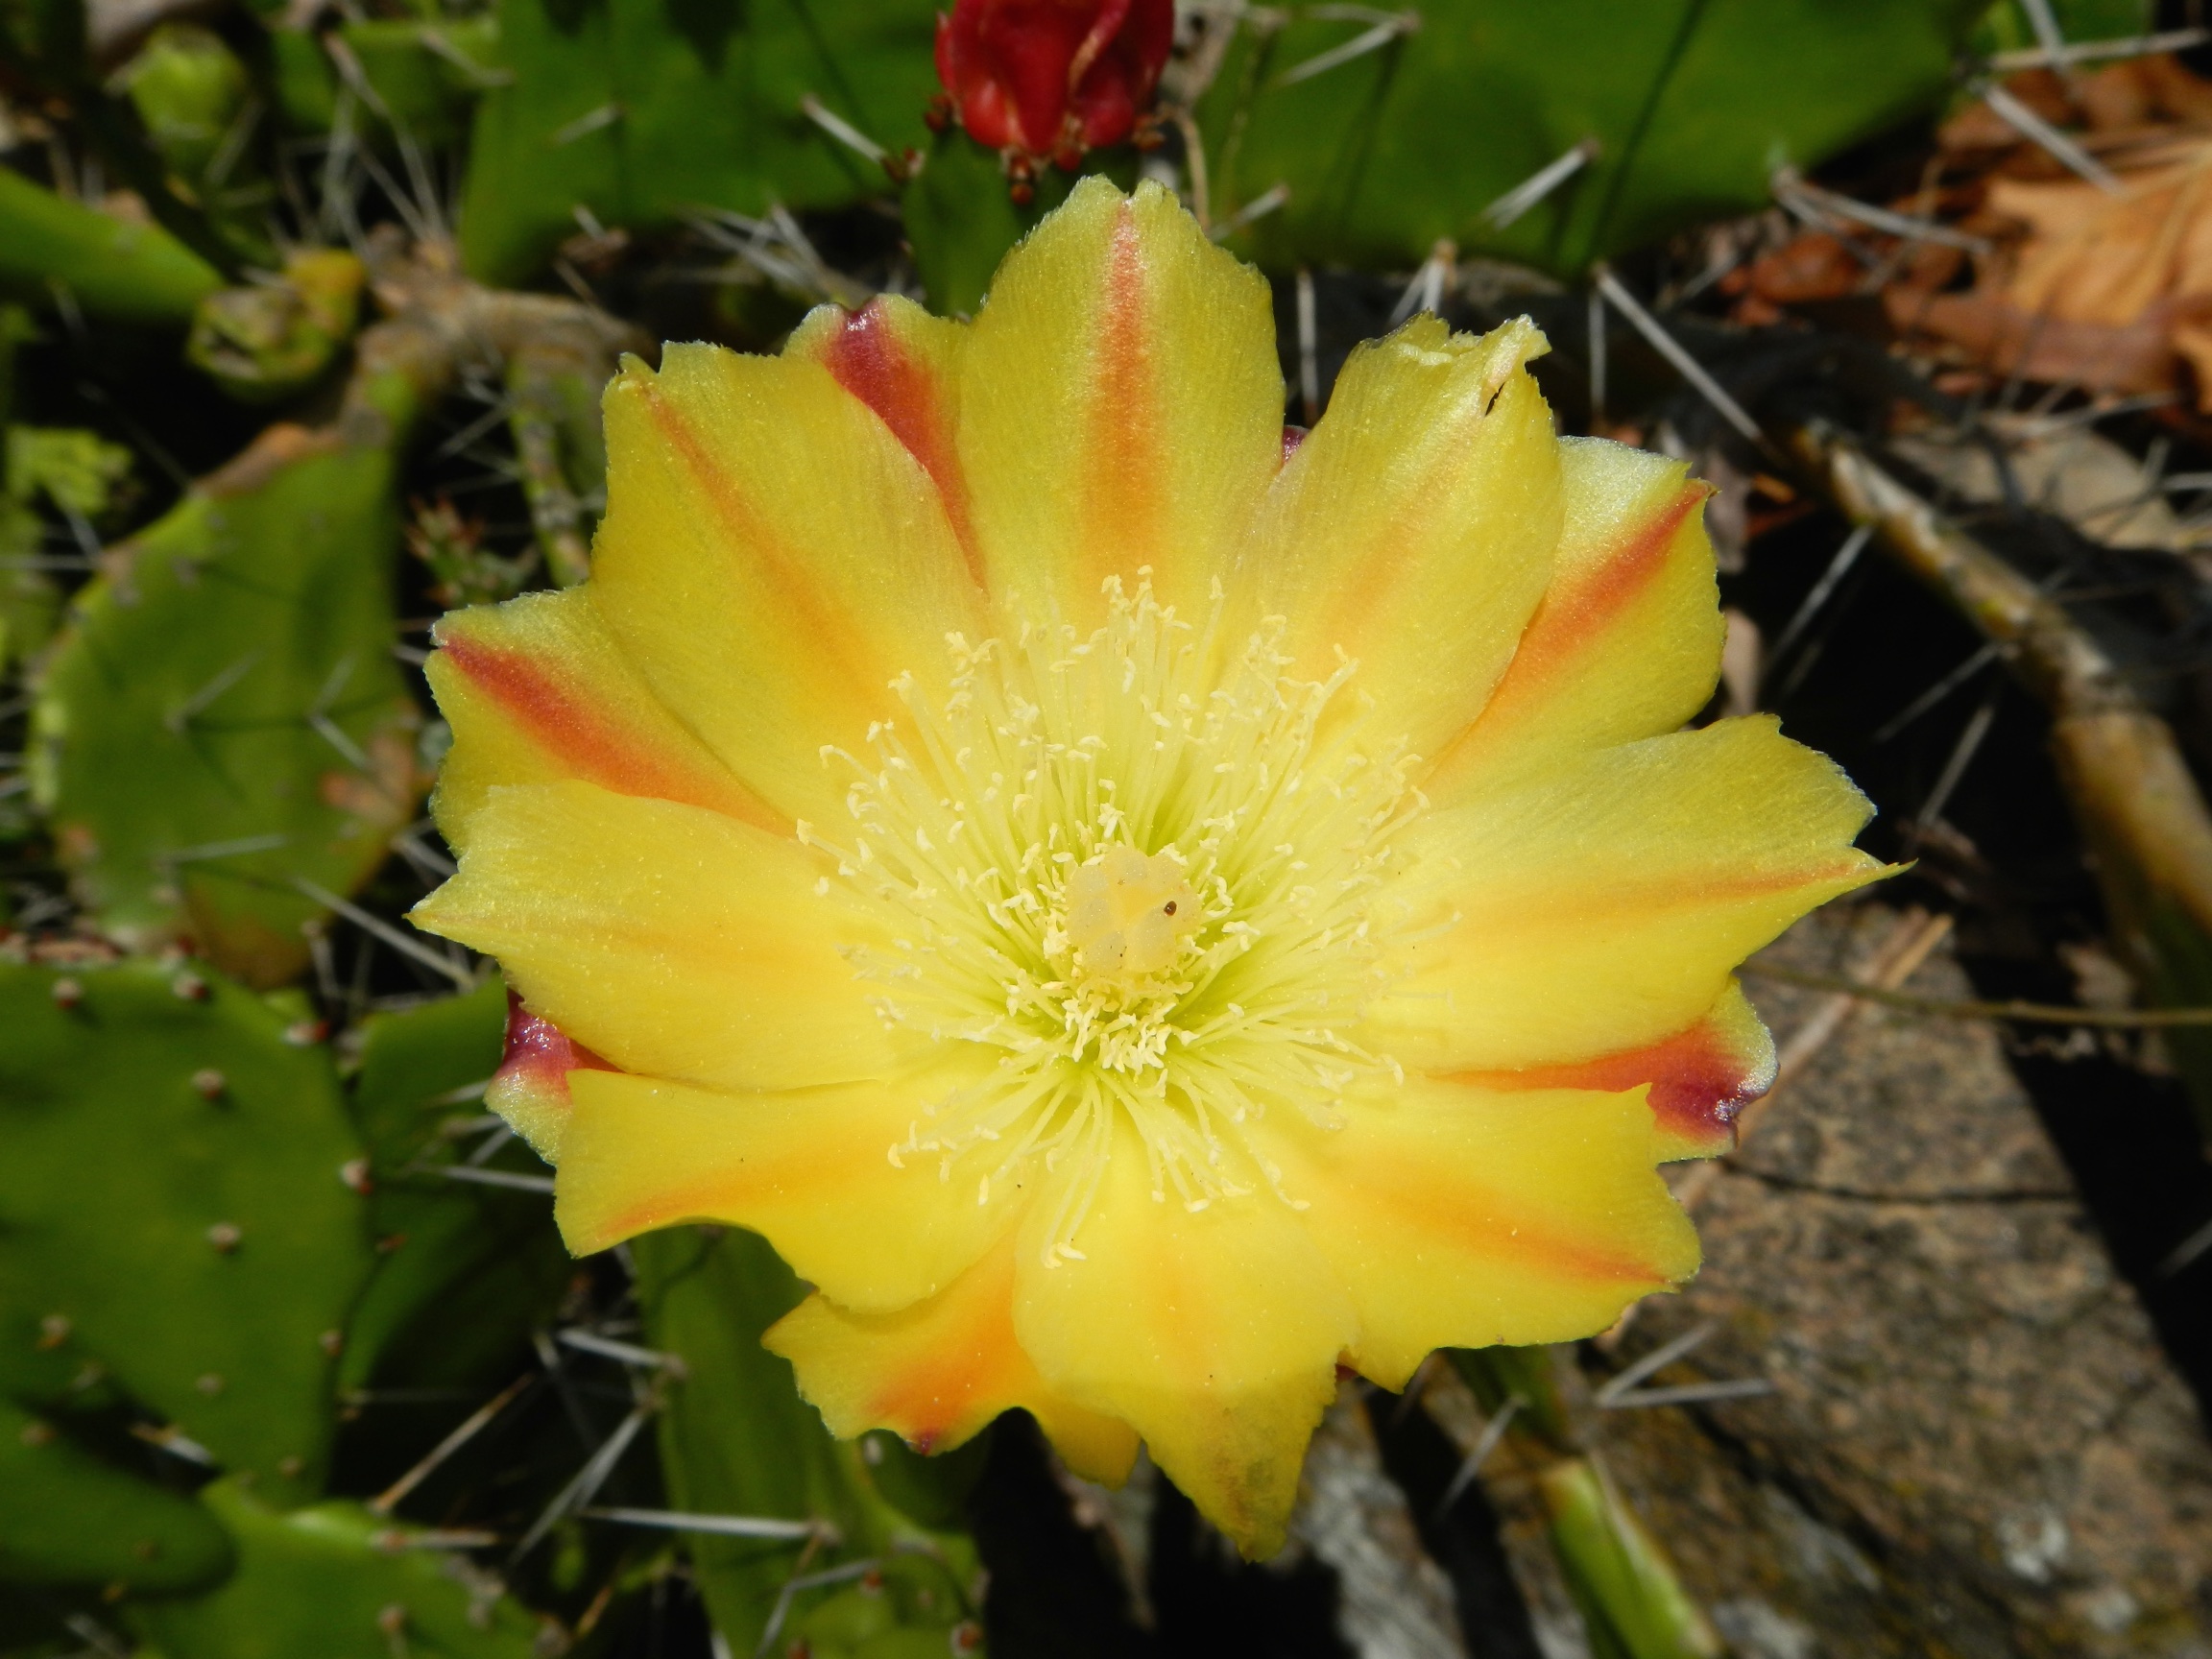  Cactus flower, Lopes Mendes, Ilha Grande, Brazil 